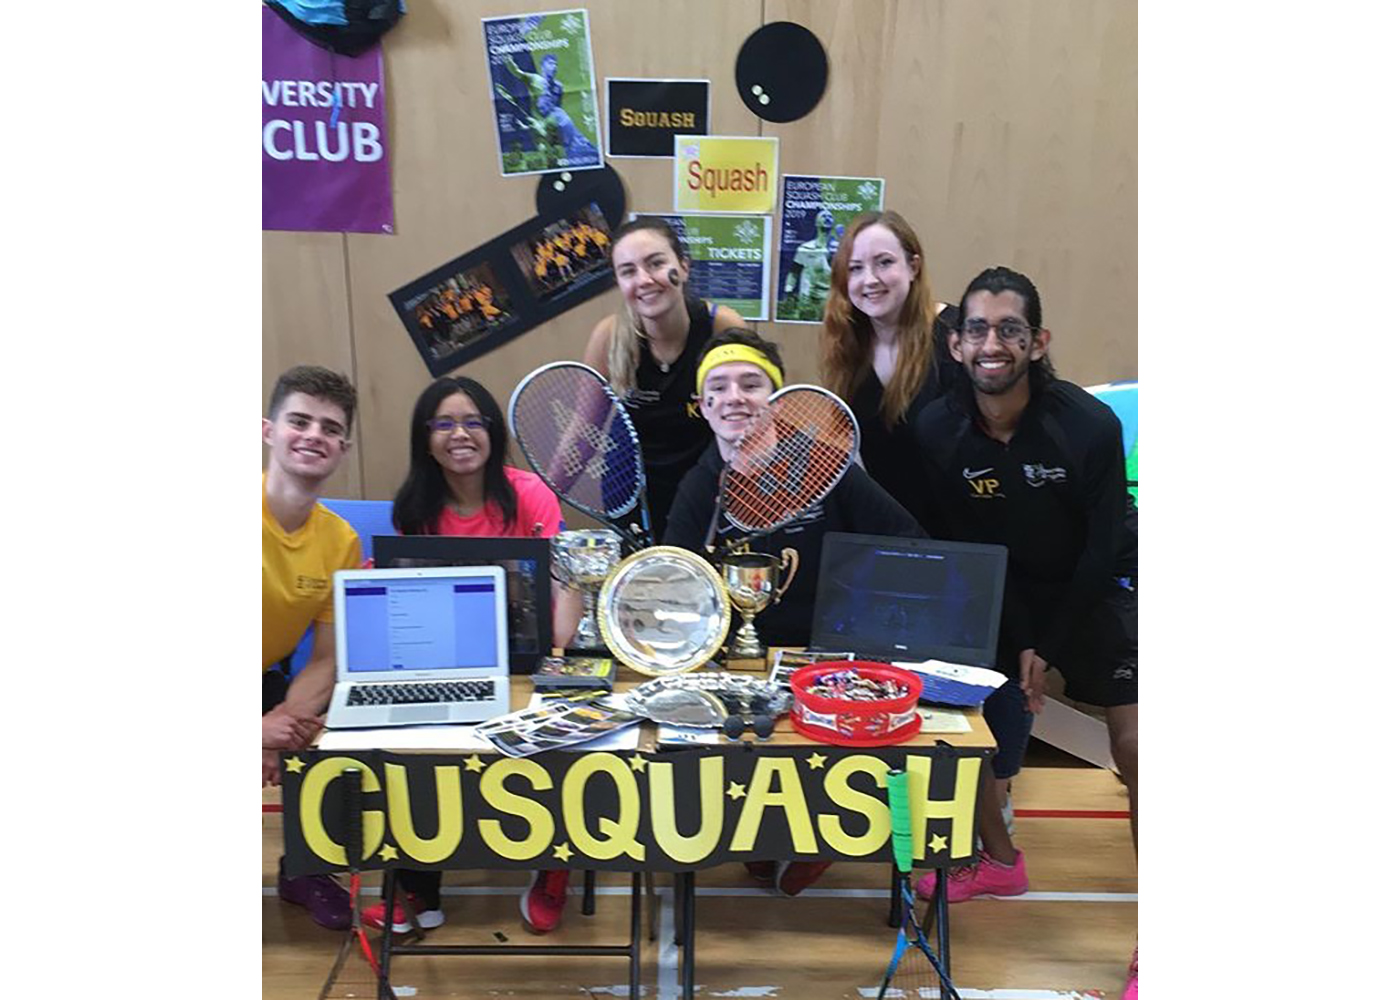 GU Squash Club